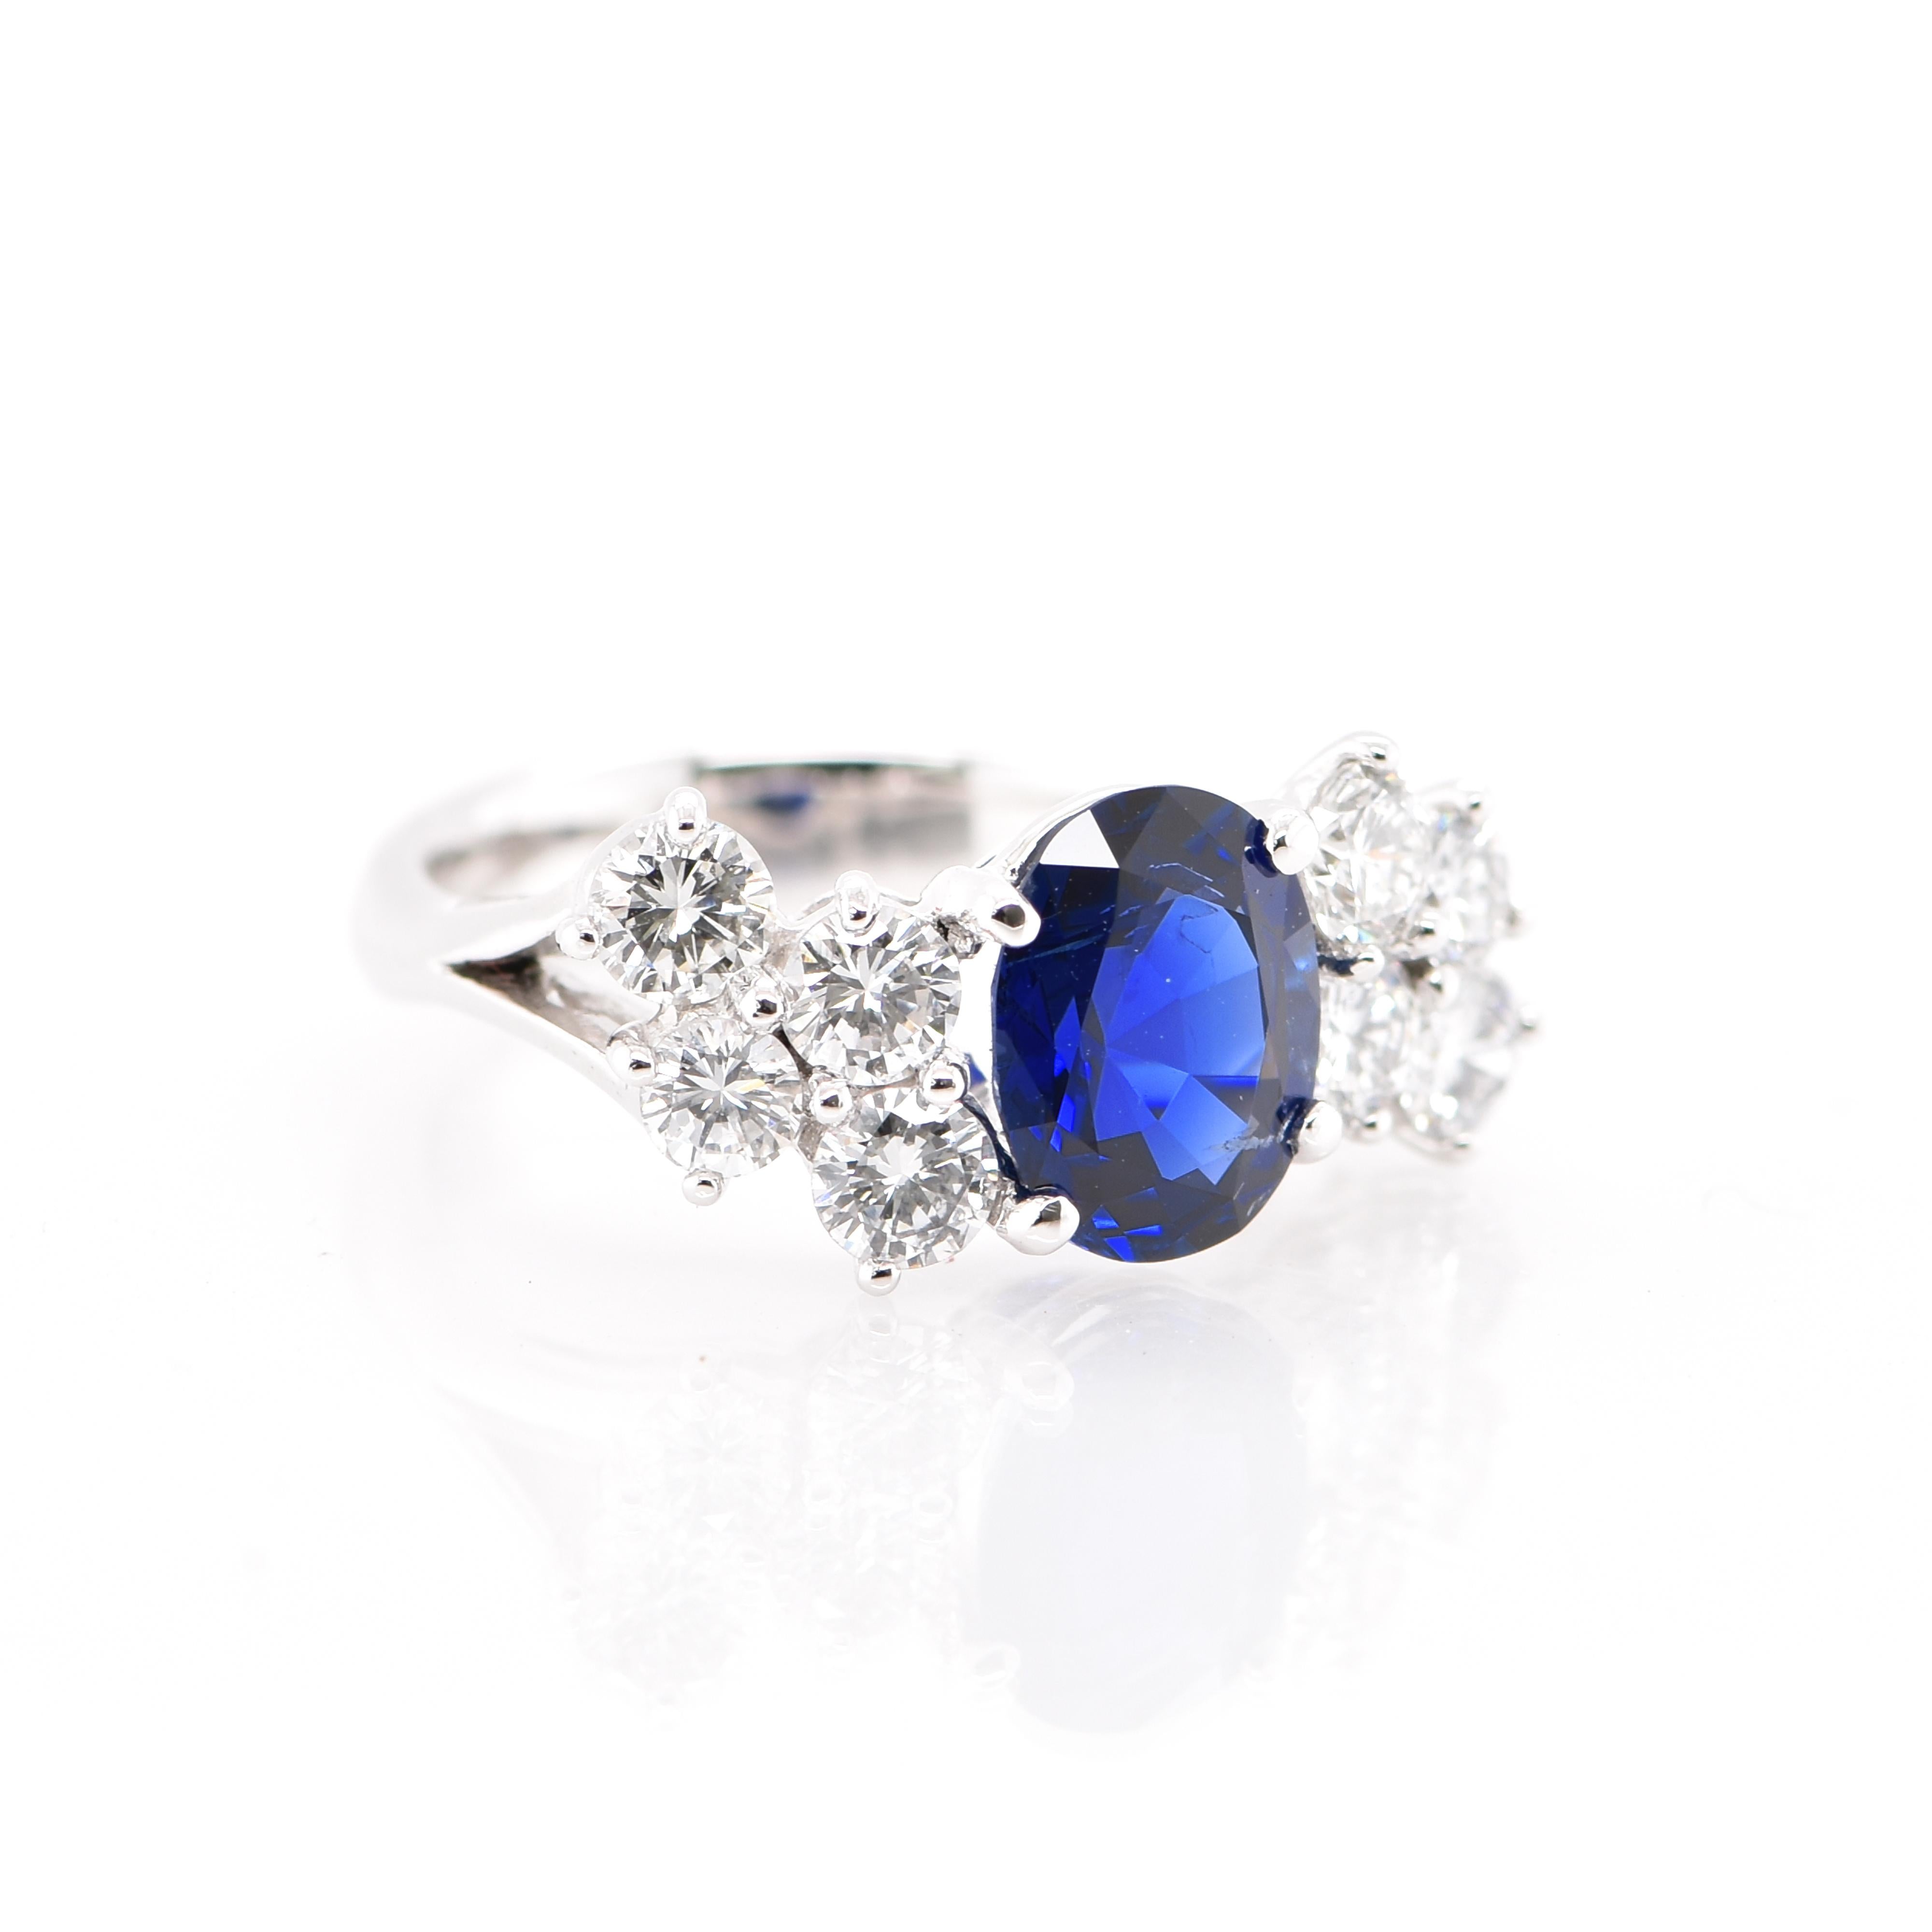 Oval Cut Royal Blue 2.36 Carat Untreated Burmese Sapphire & Diamond Ring Set in Platinum